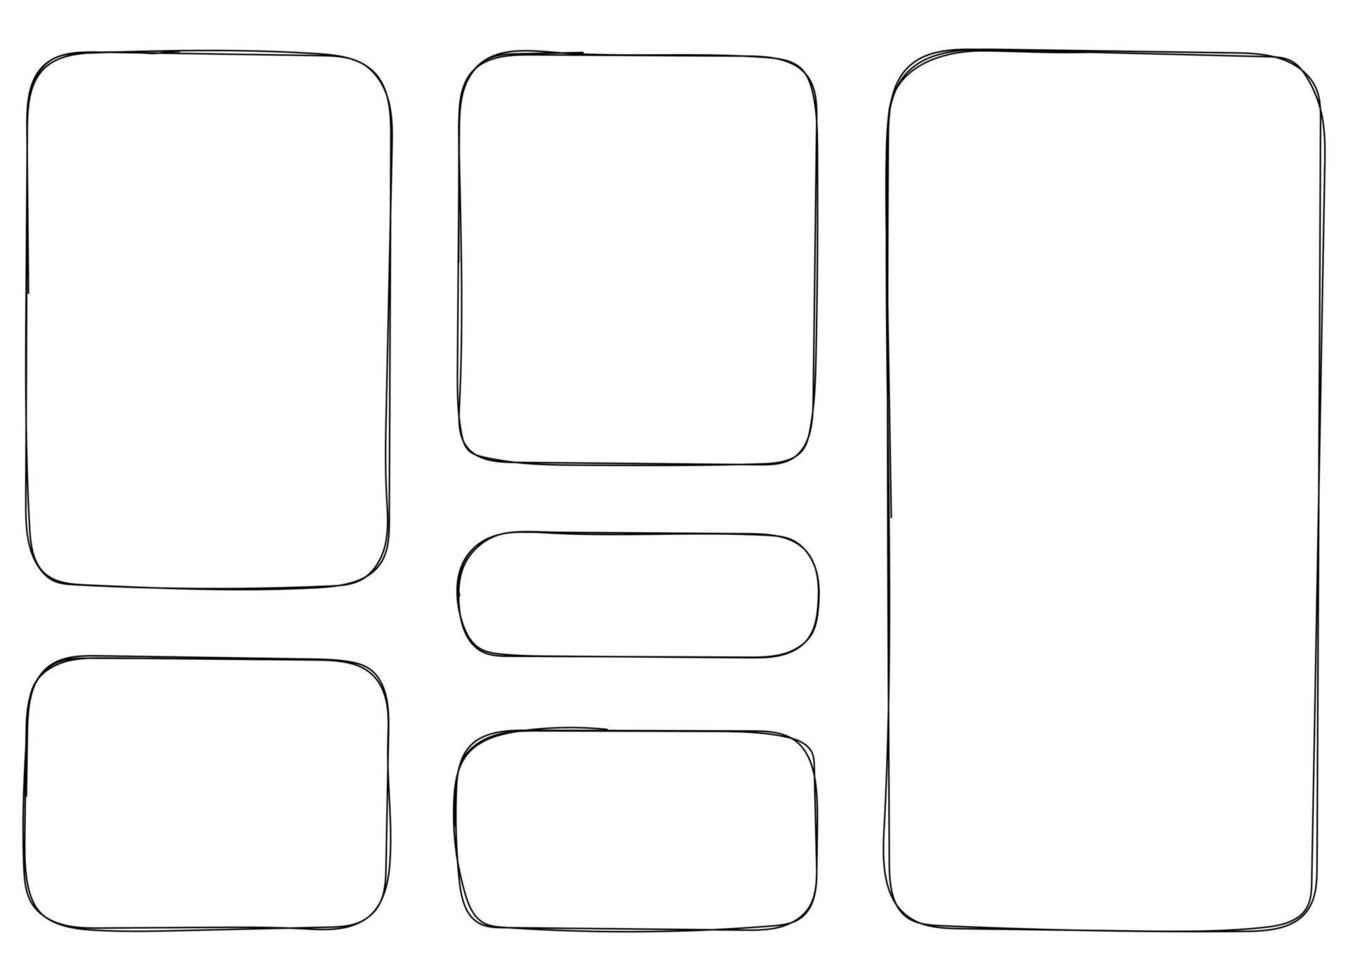 Hand drawn highlighter rectangle vector set